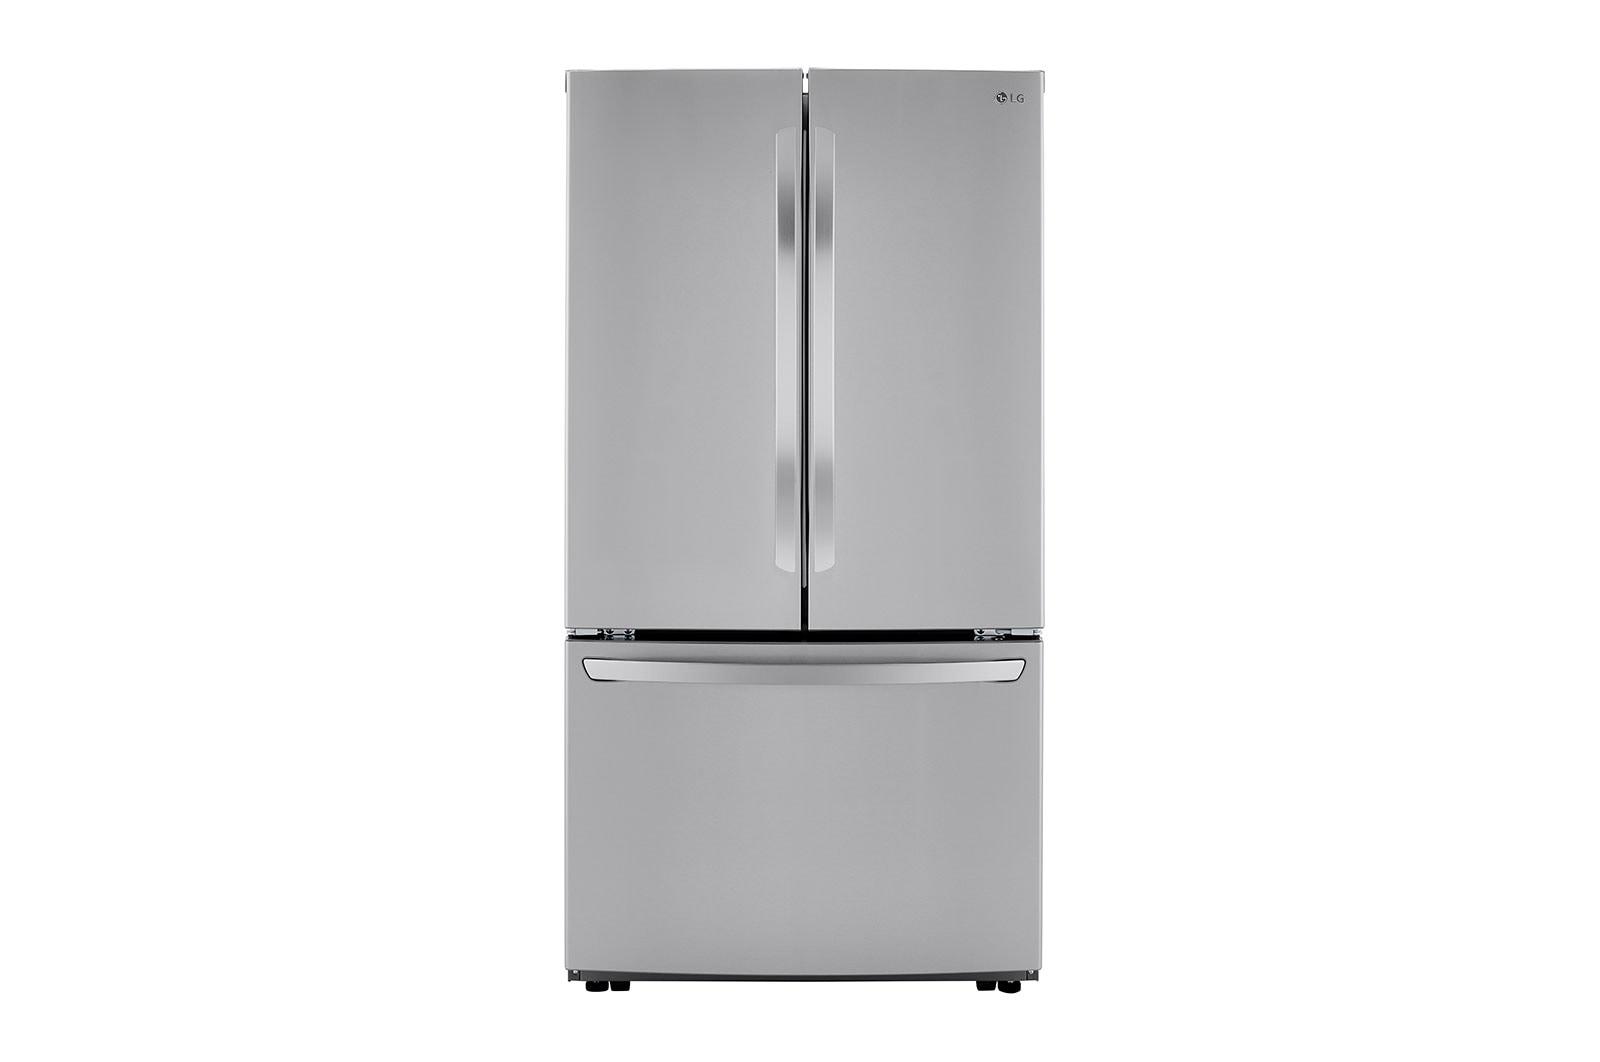 Lg 29 cu. ft. Smart French Door Refrigerator